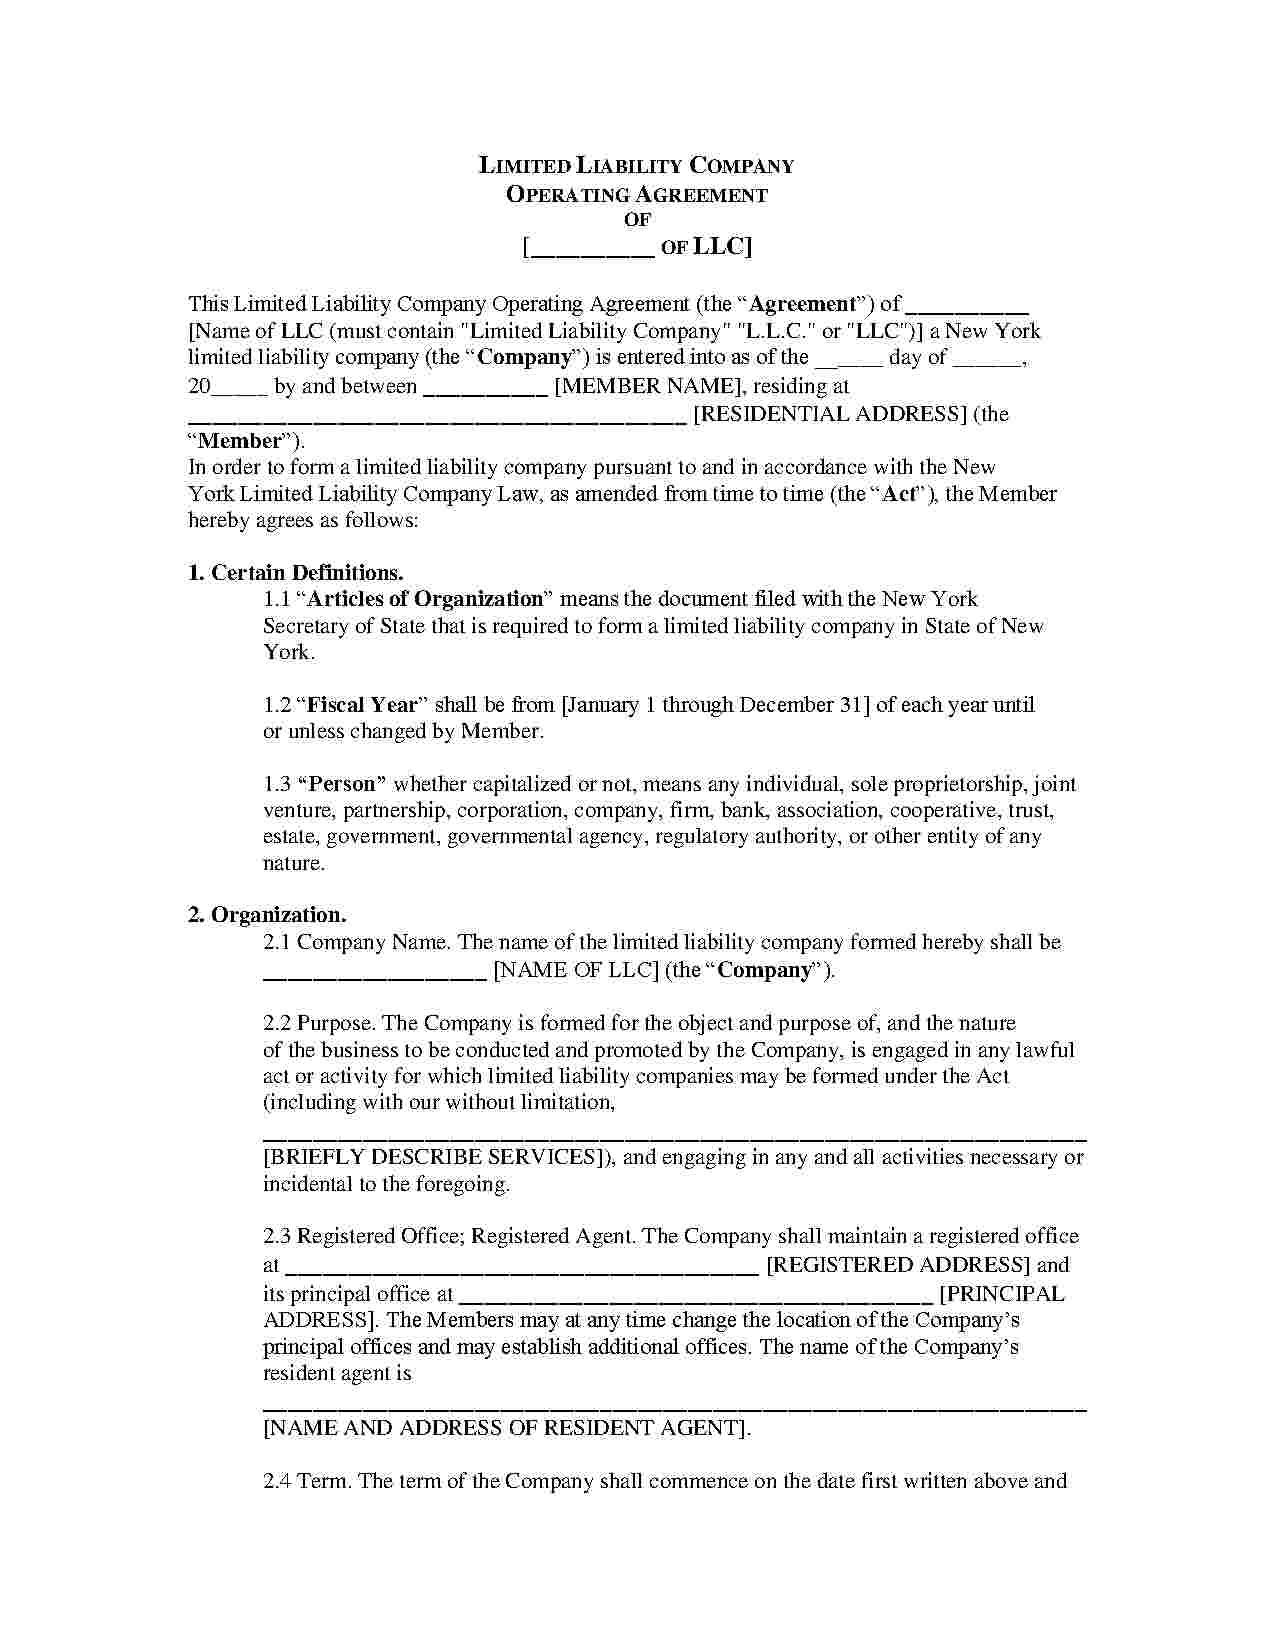 Llc Operating Agreements Download Amendment To Llc Operating Agreement Style 10 Template For